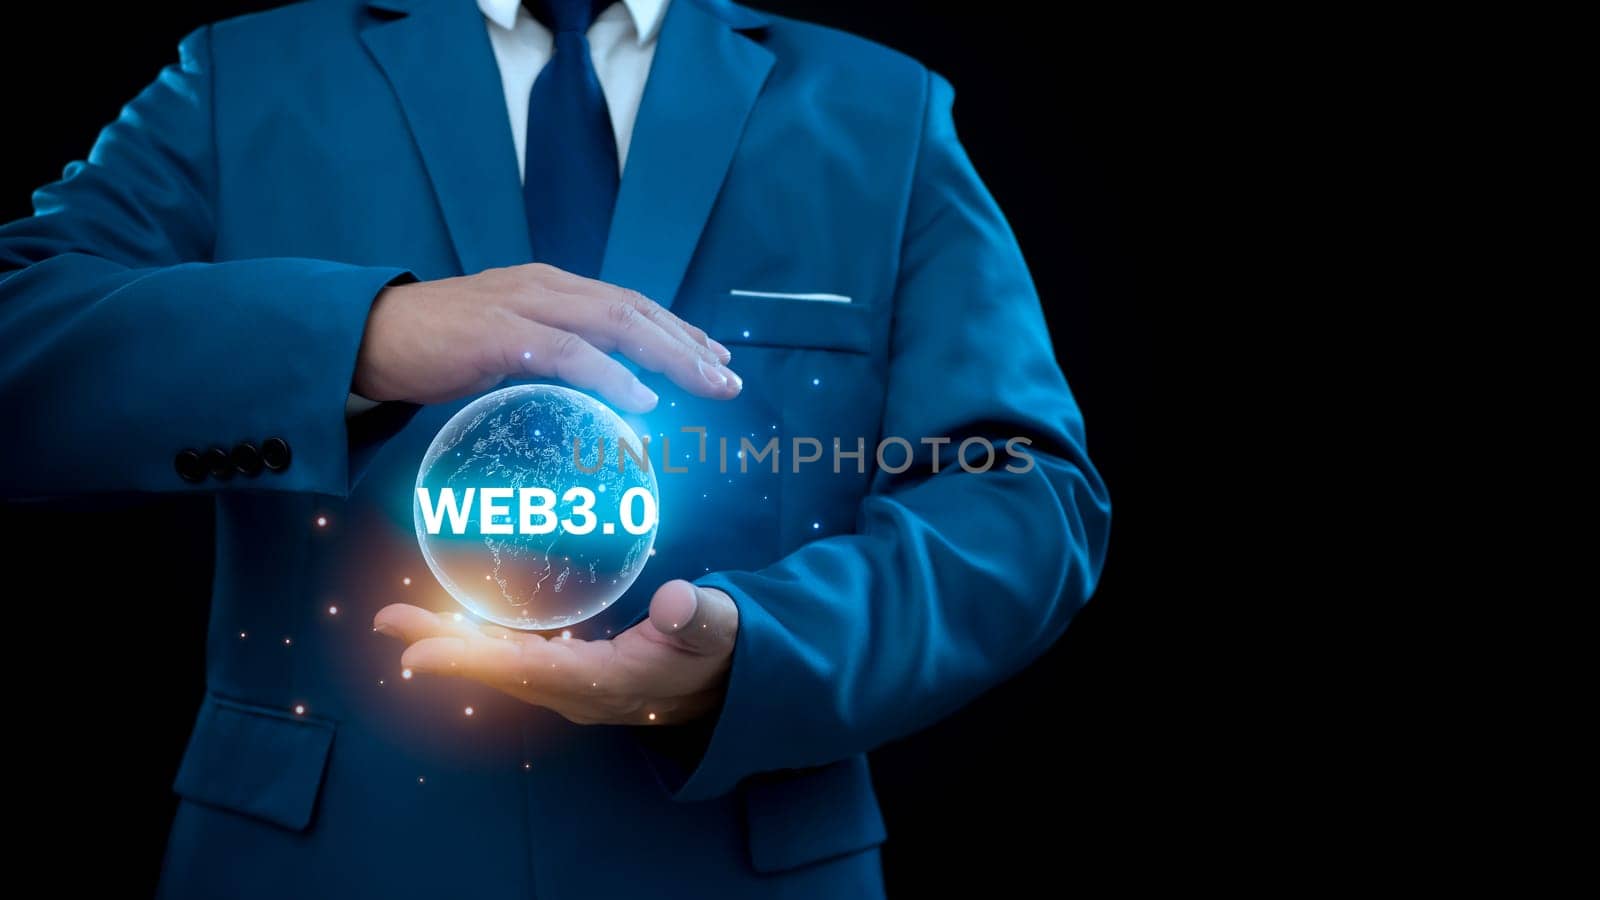 Web 3.0 concept with businessman in suit on black background. Technology and web concept 3.0. Technology global network. website internet development.